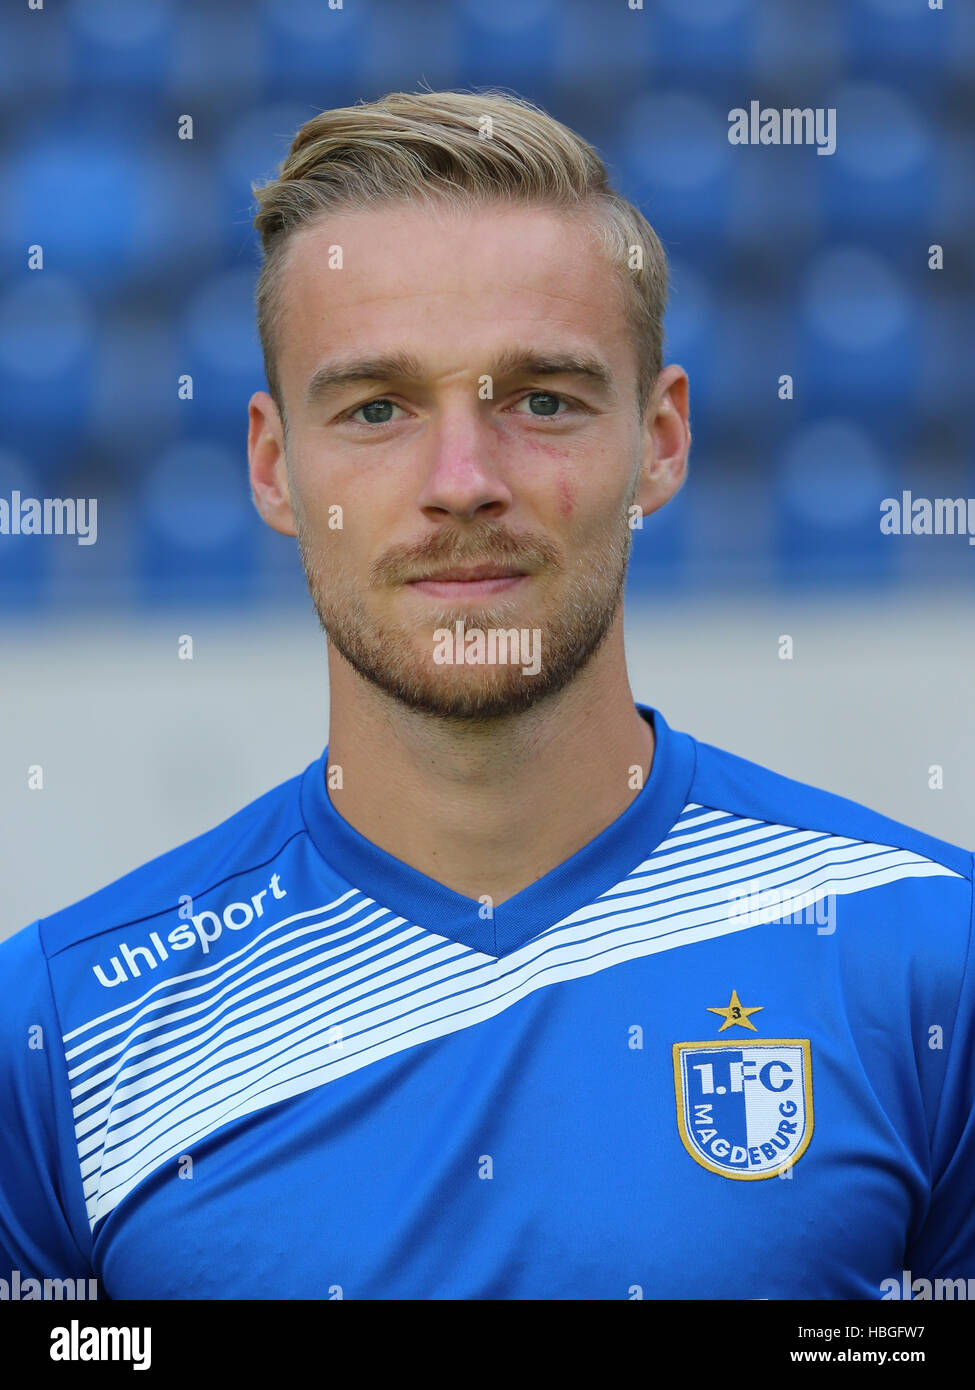 Nils Butzen (1.FC Magdeburg) Stock Photo